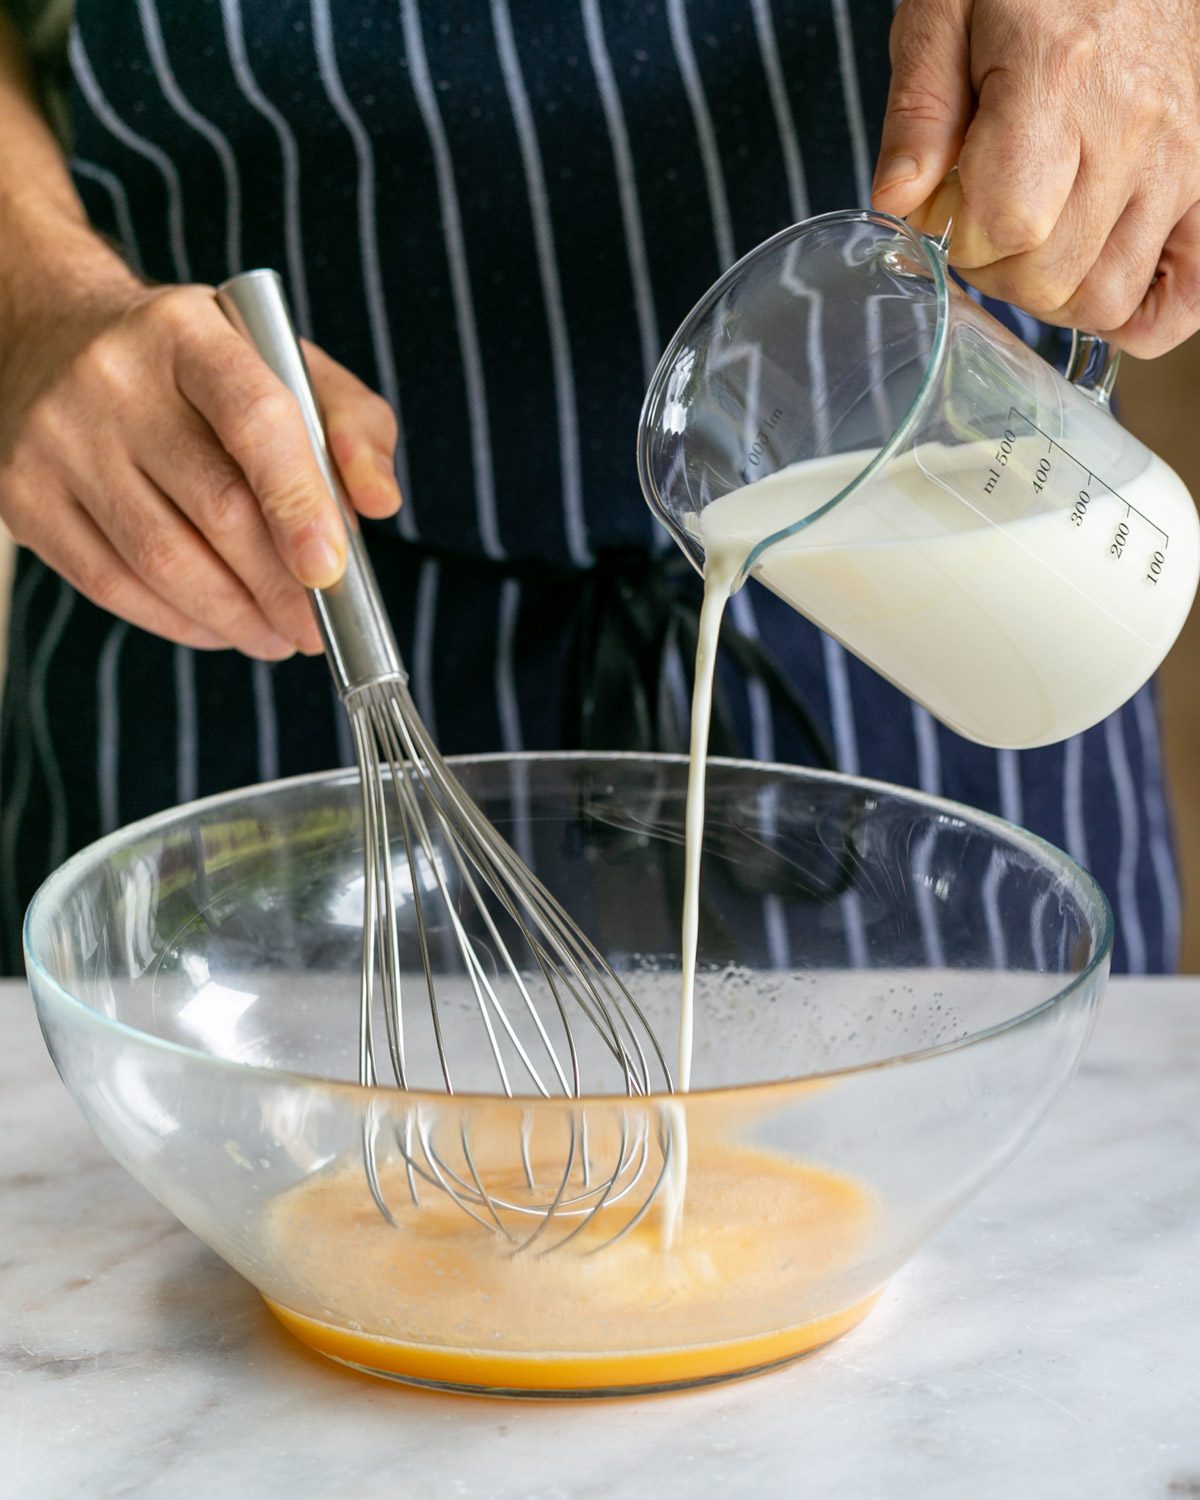 Adding milk to make crepe batter